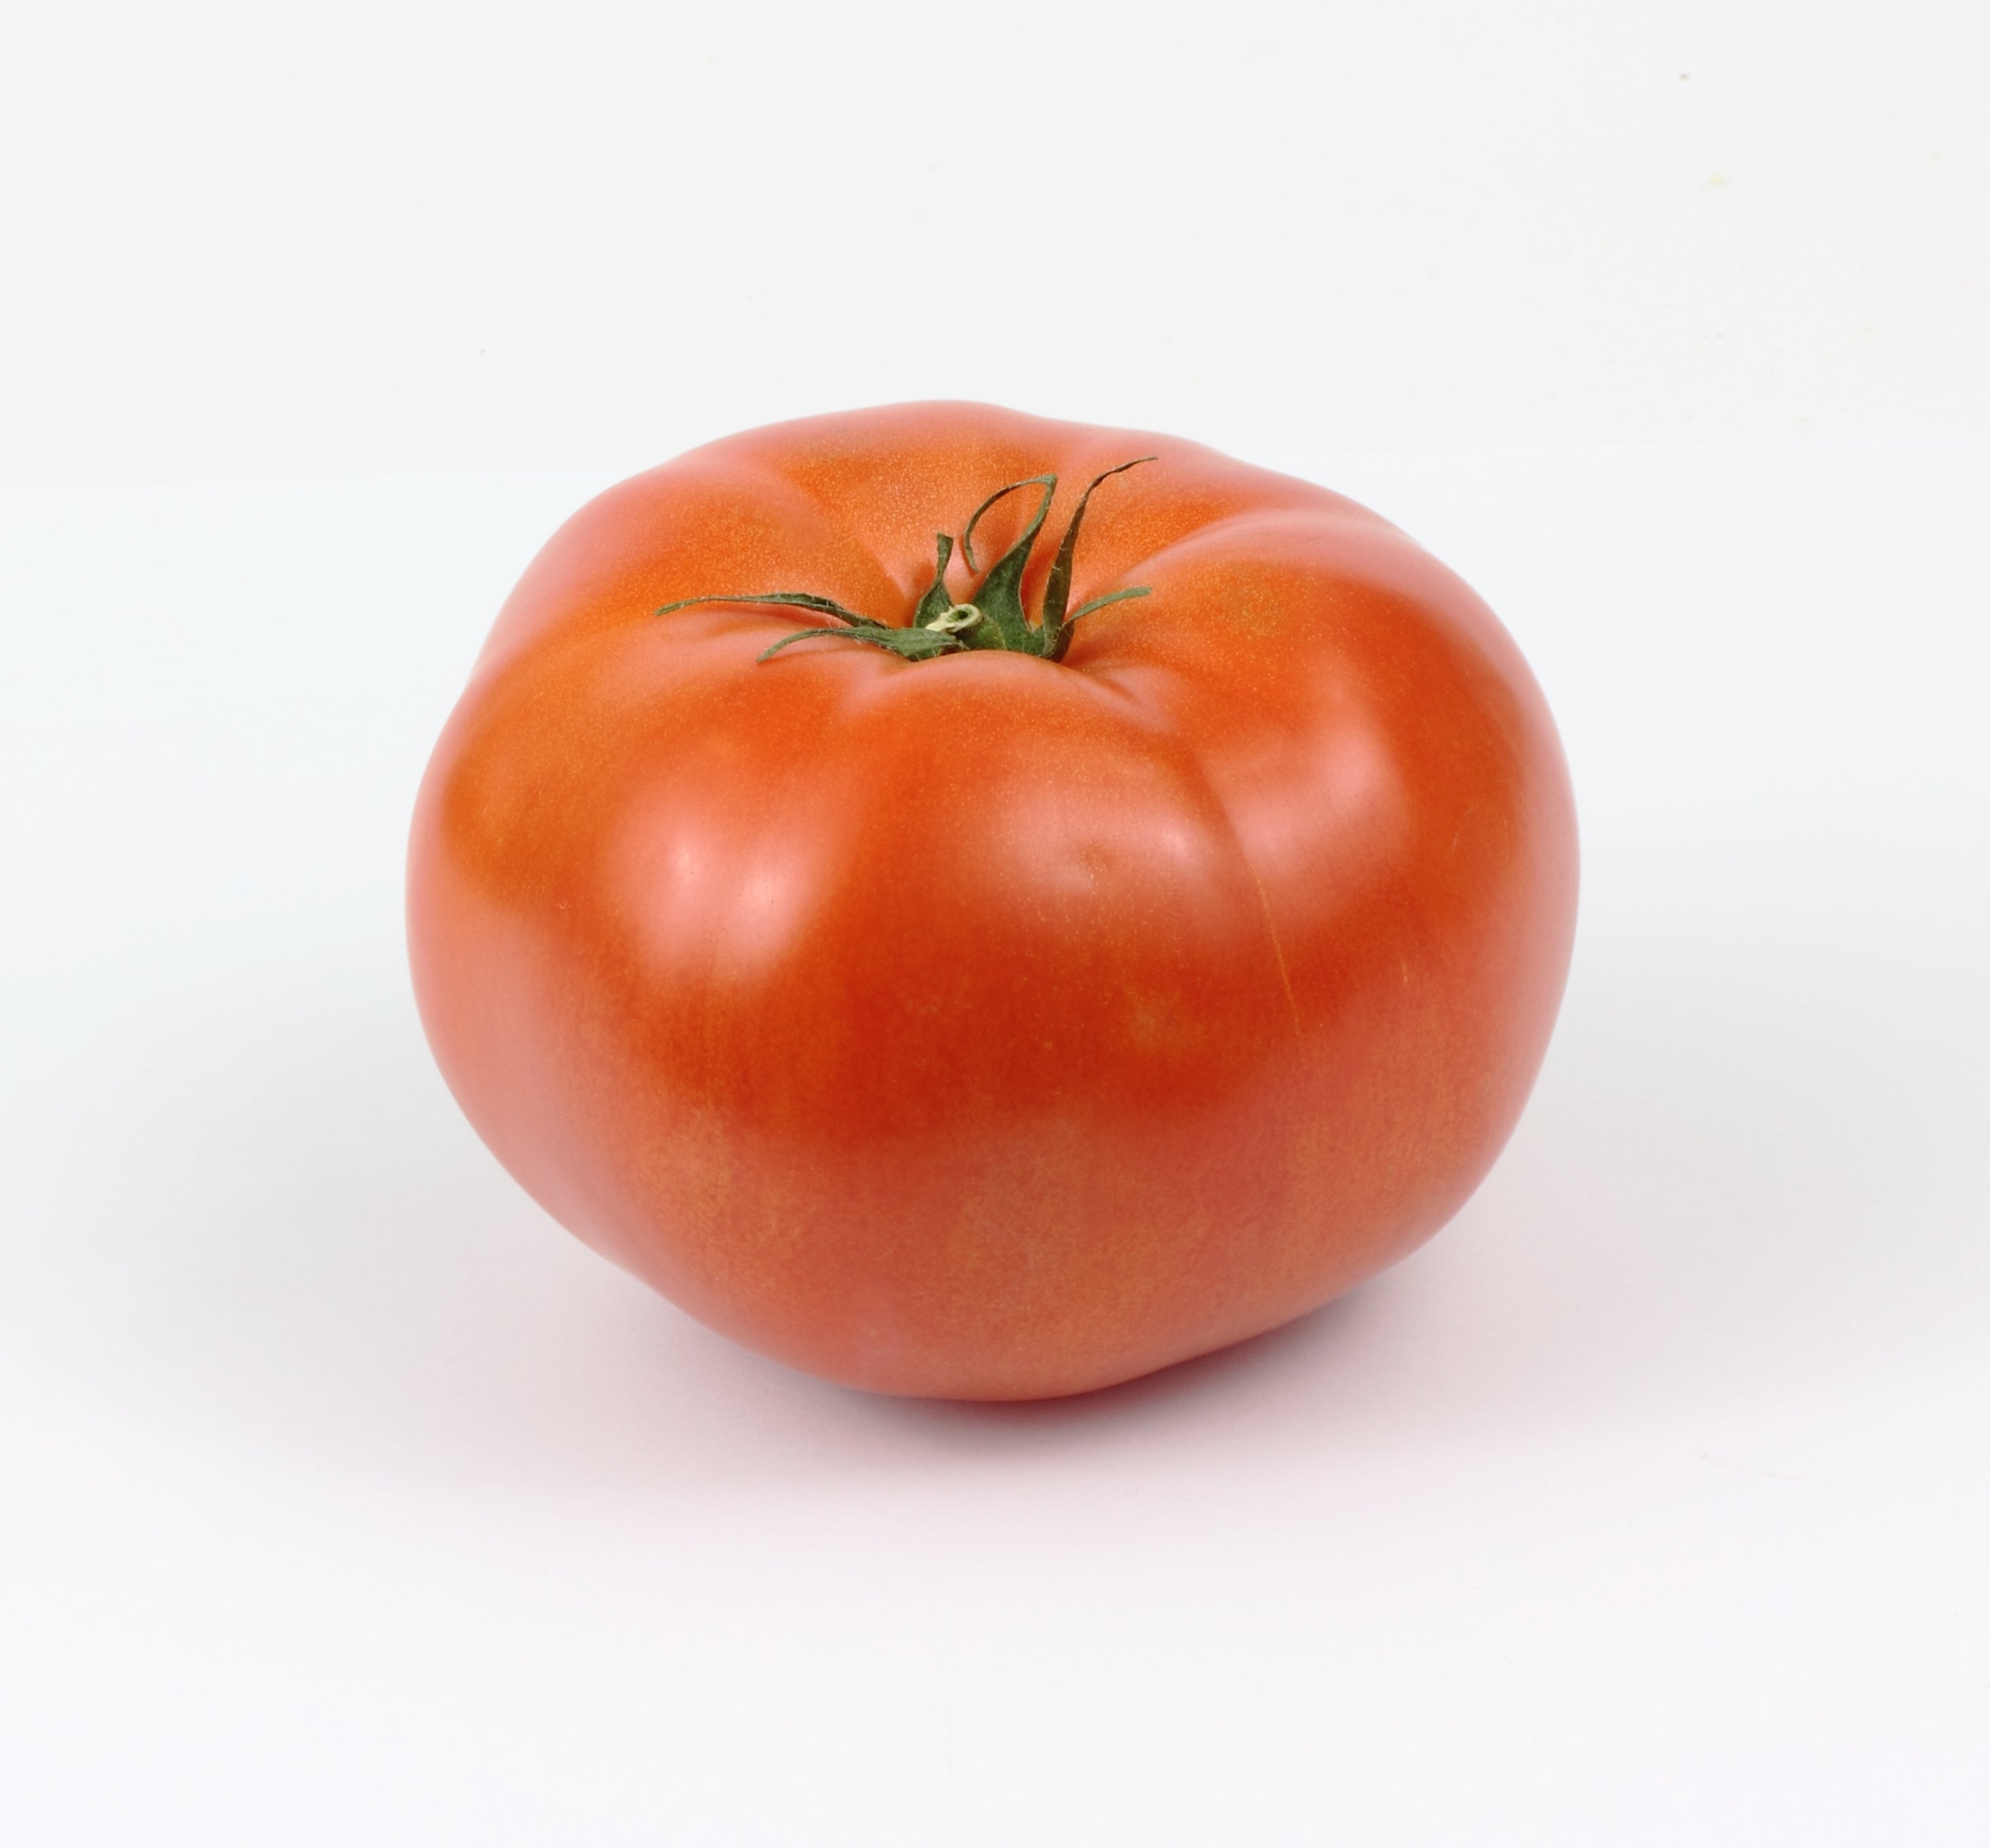 Beefsteak Tomato Seeds - Heirloom